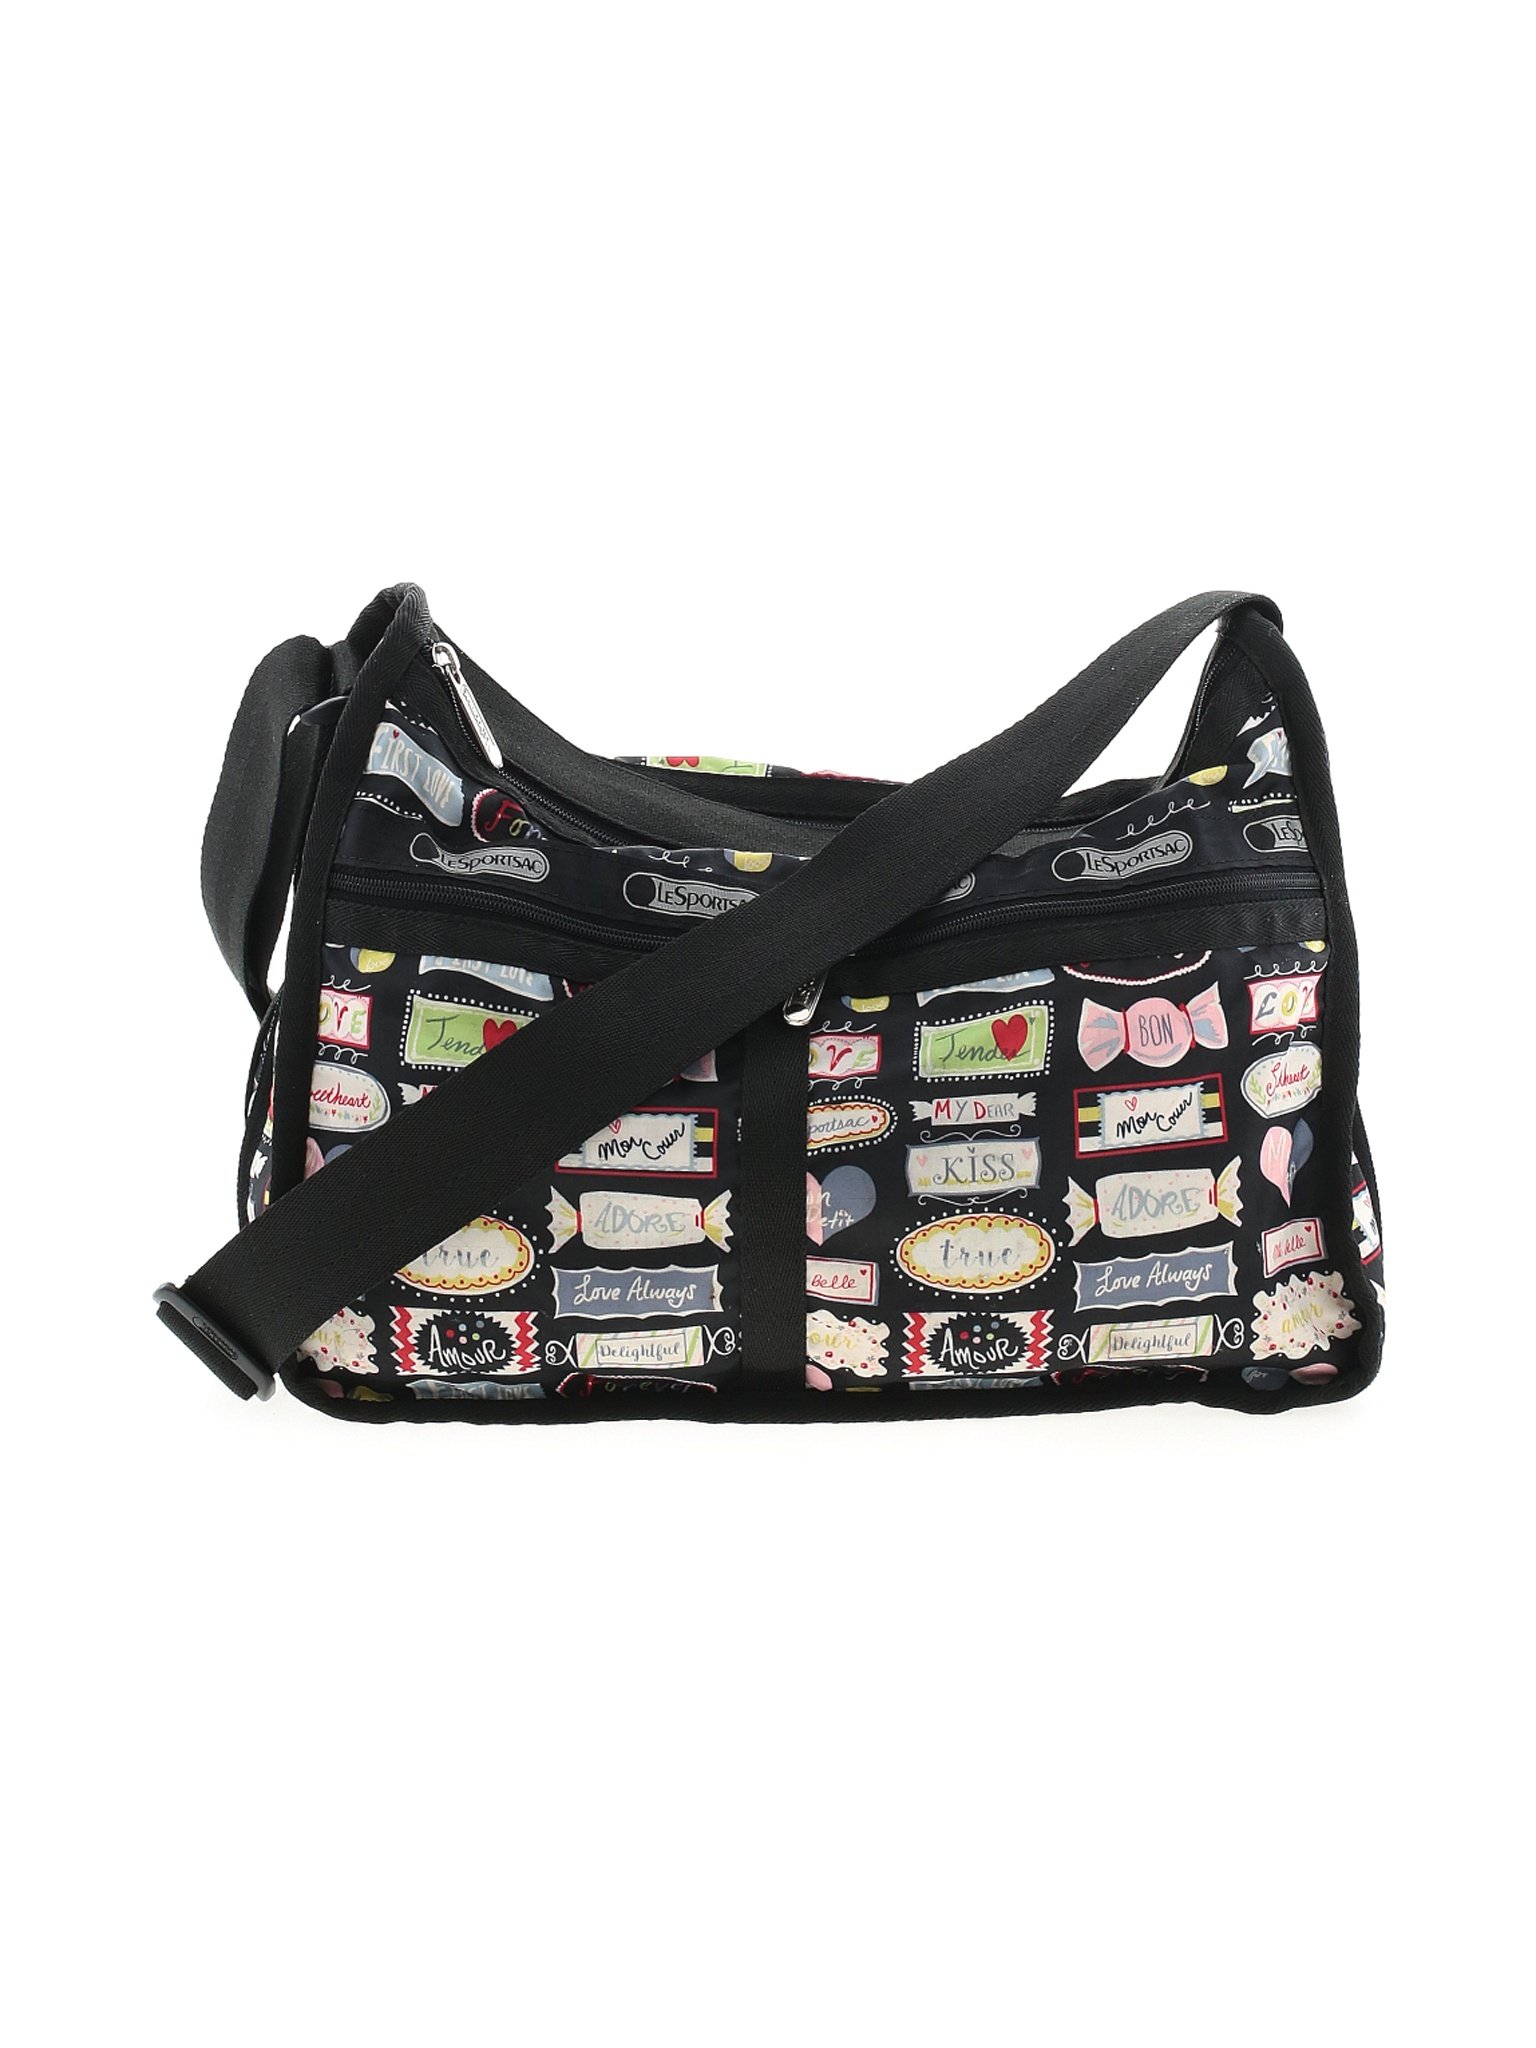 LeSportsac Women Black Crossbody Bag One Size | eBay